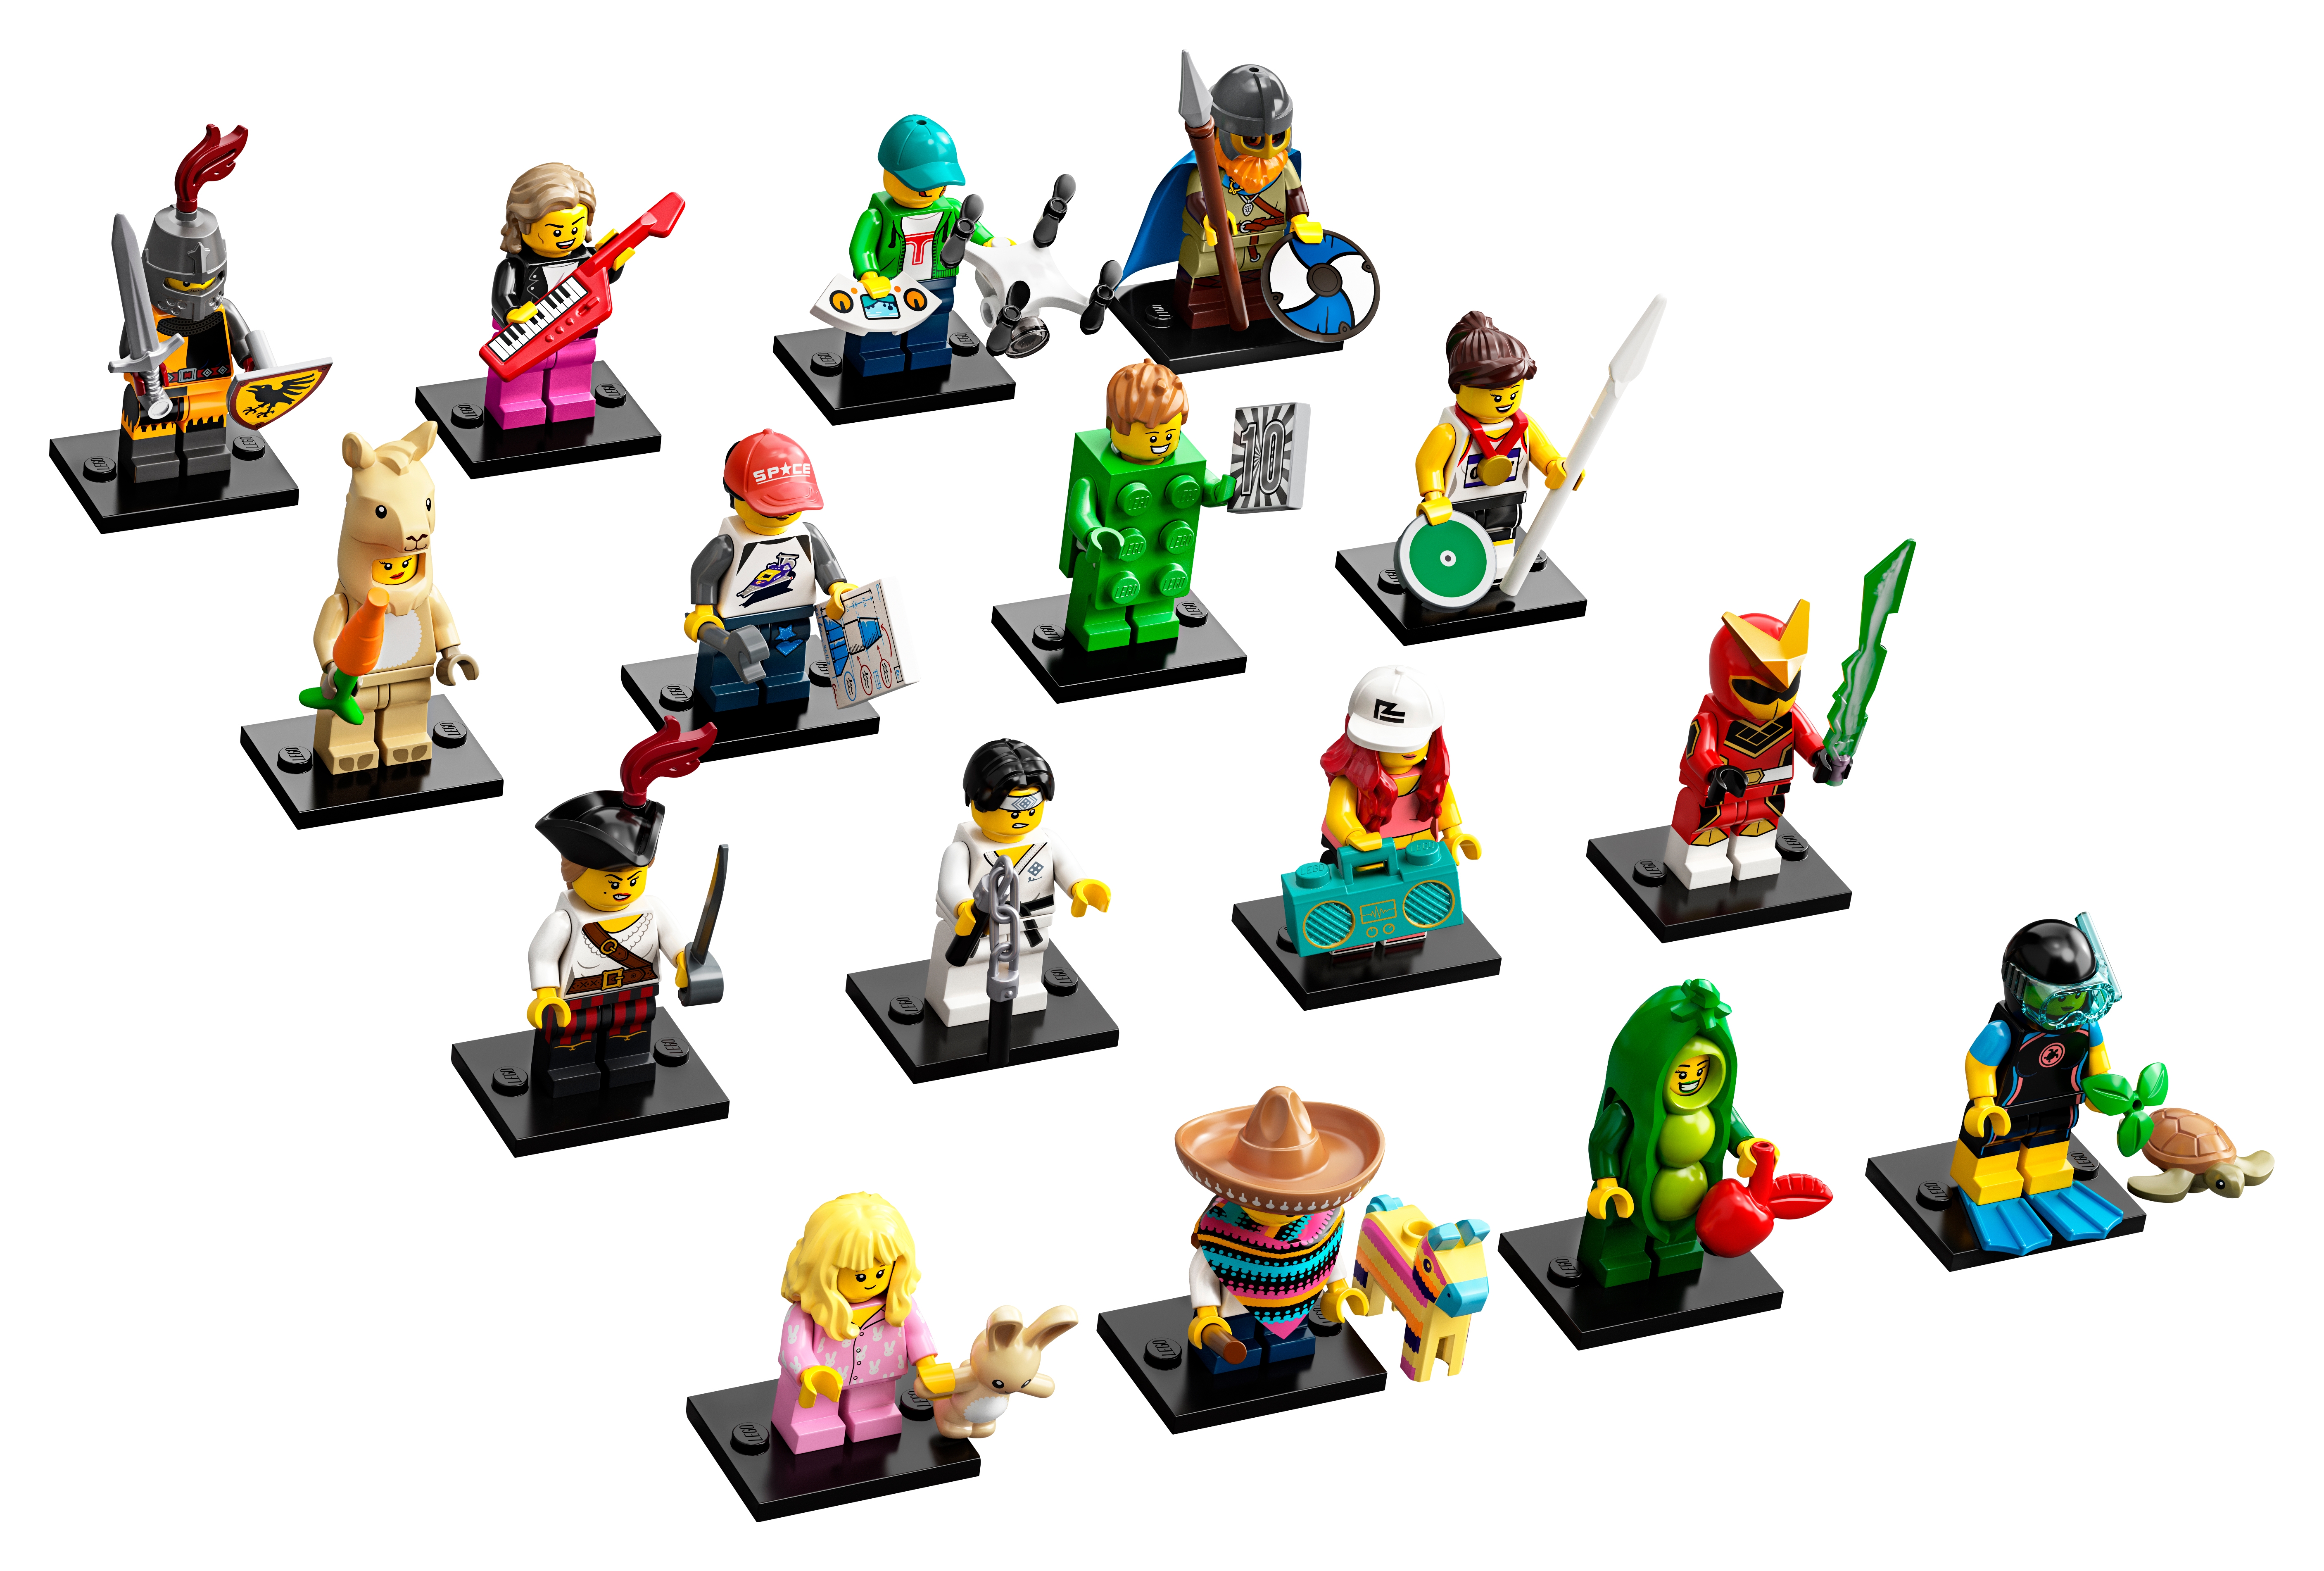 latest lego minifigures